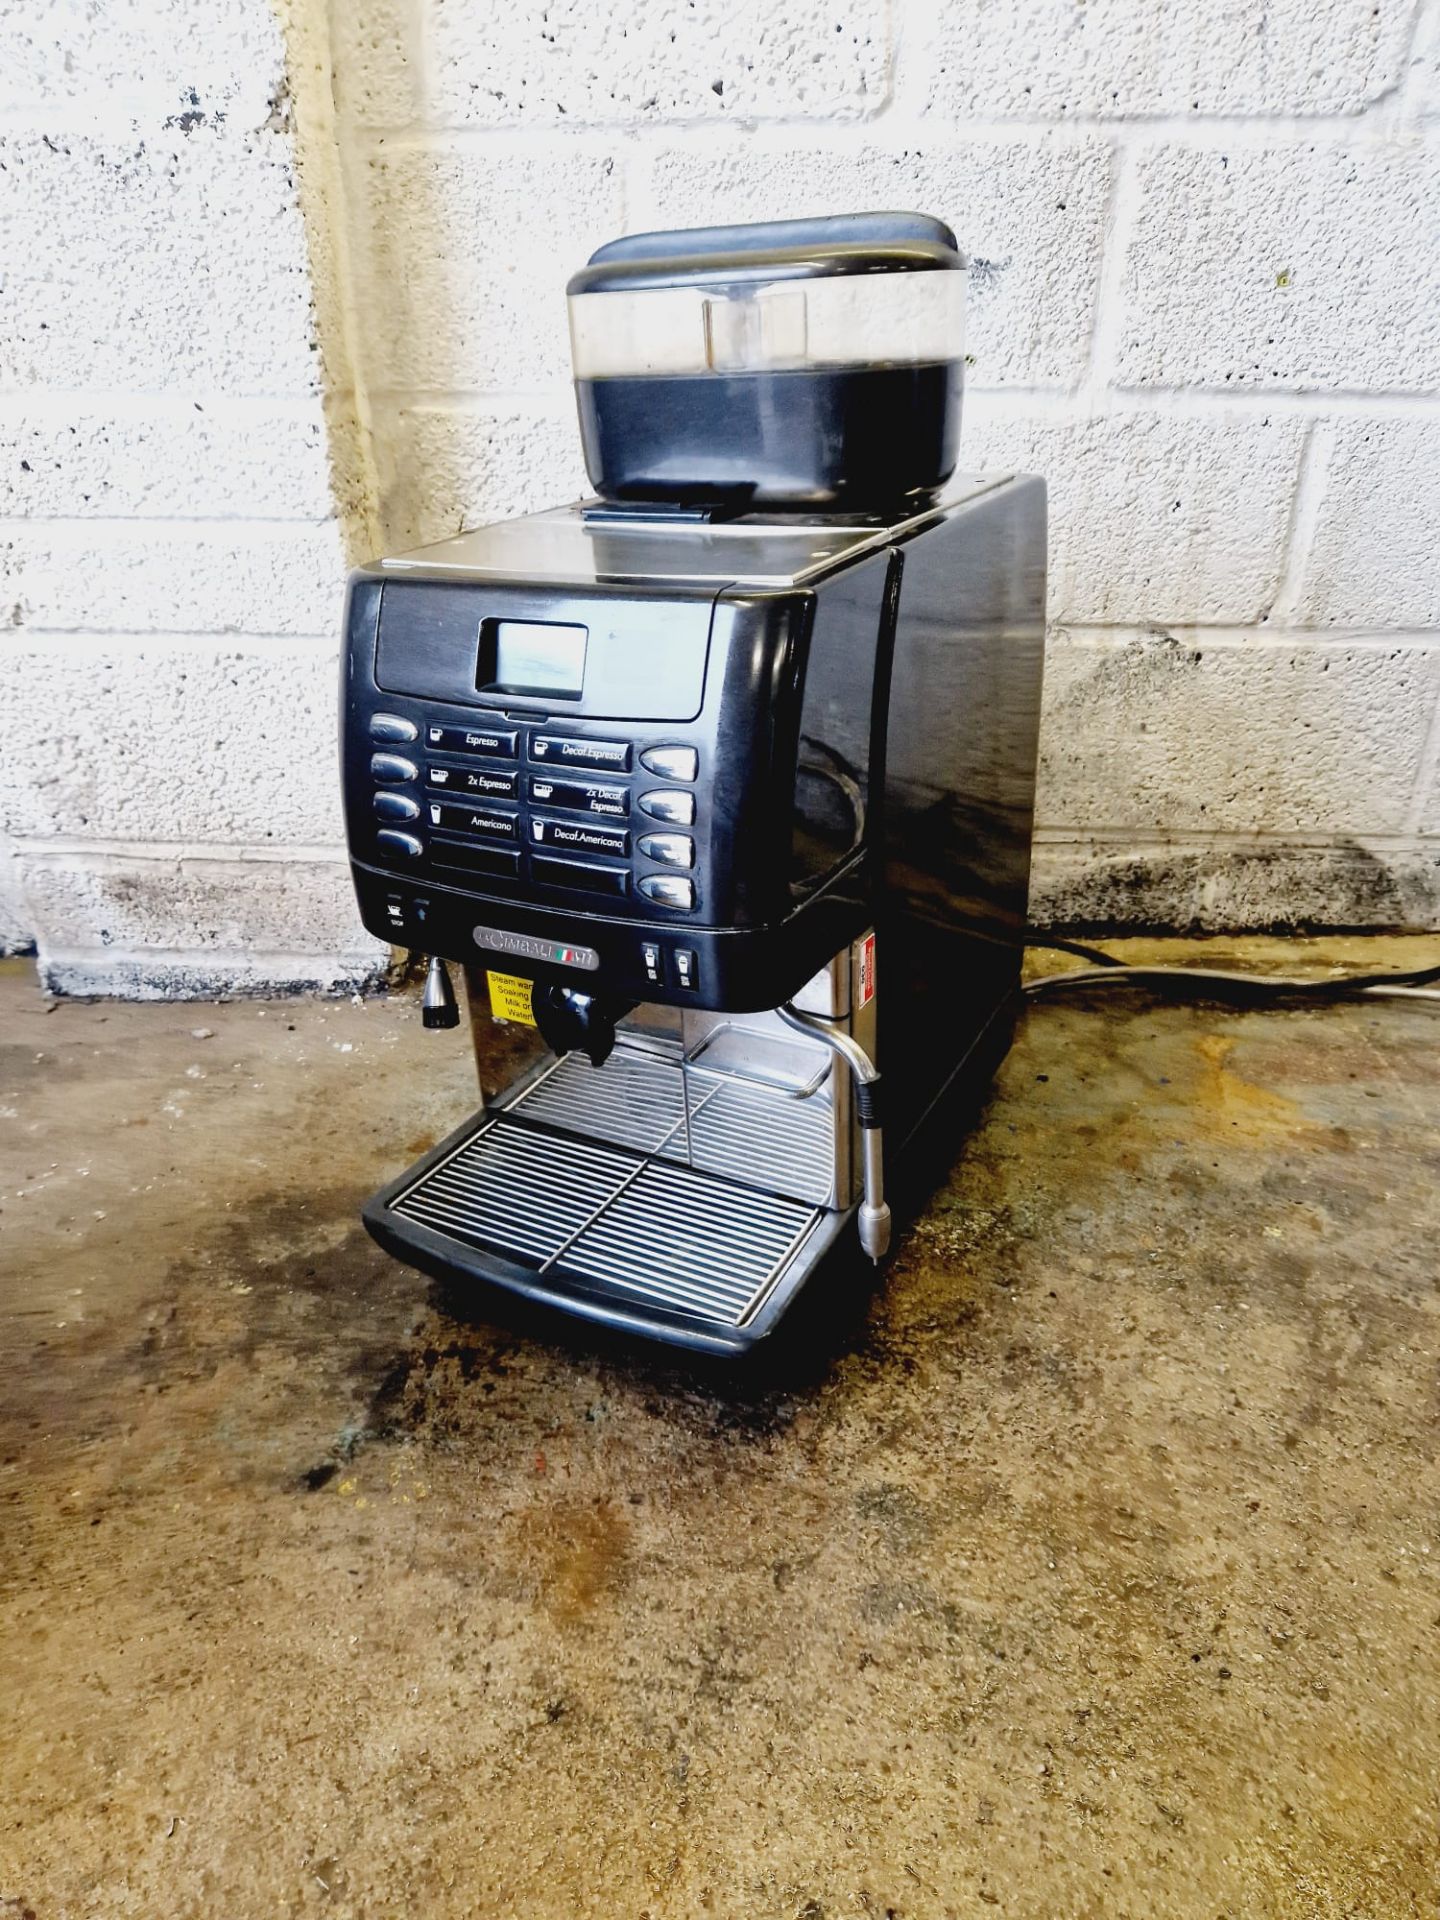 LACIMBALI M1 AUTOMATIC COFFEE MACHINE - UNTESTED